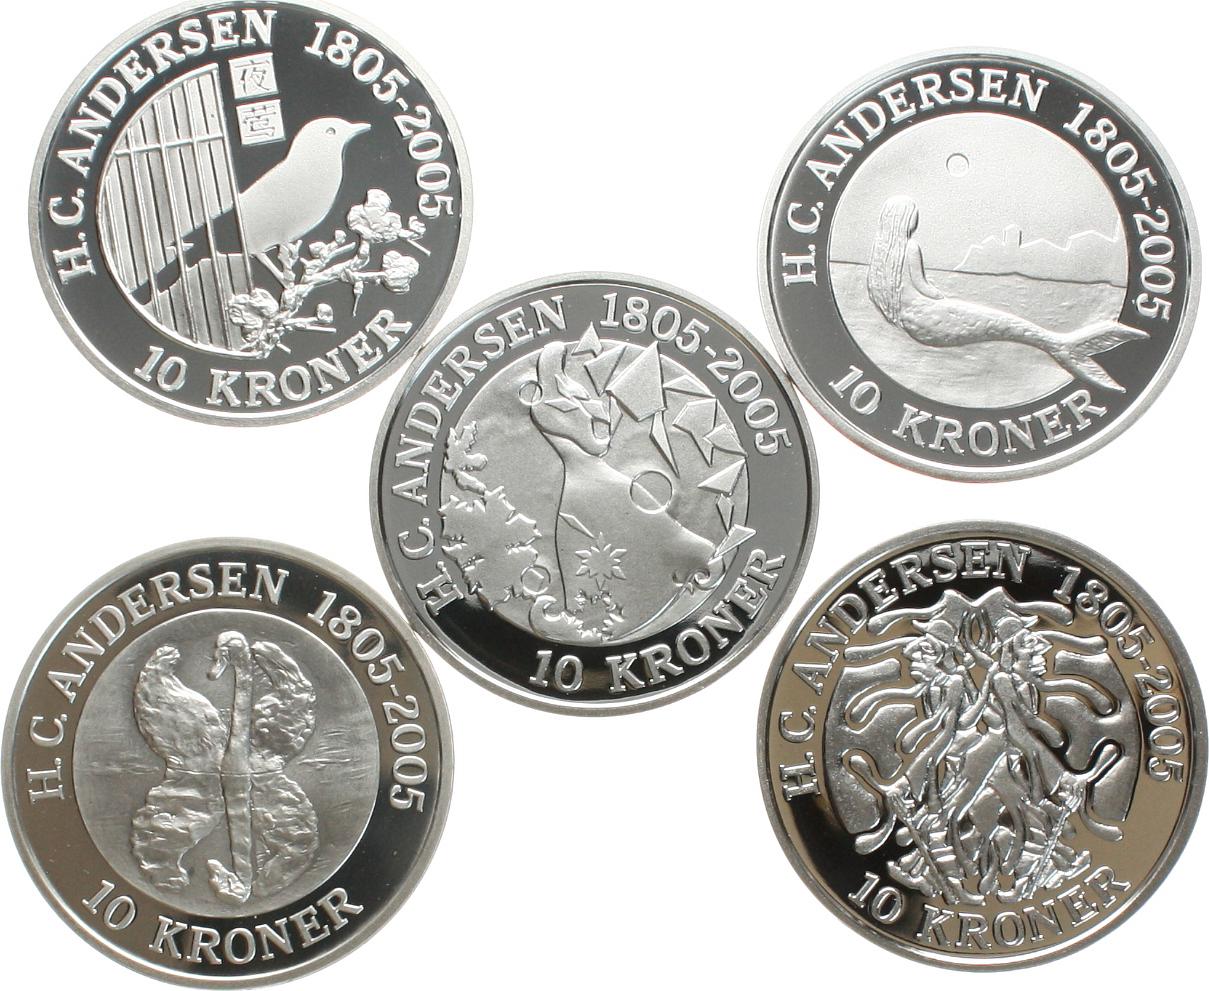  Dänemark: Margrethe II., 5 x 10 Kronen in Silber, 5 Unzen FEINsilber!! Näheres unten!   